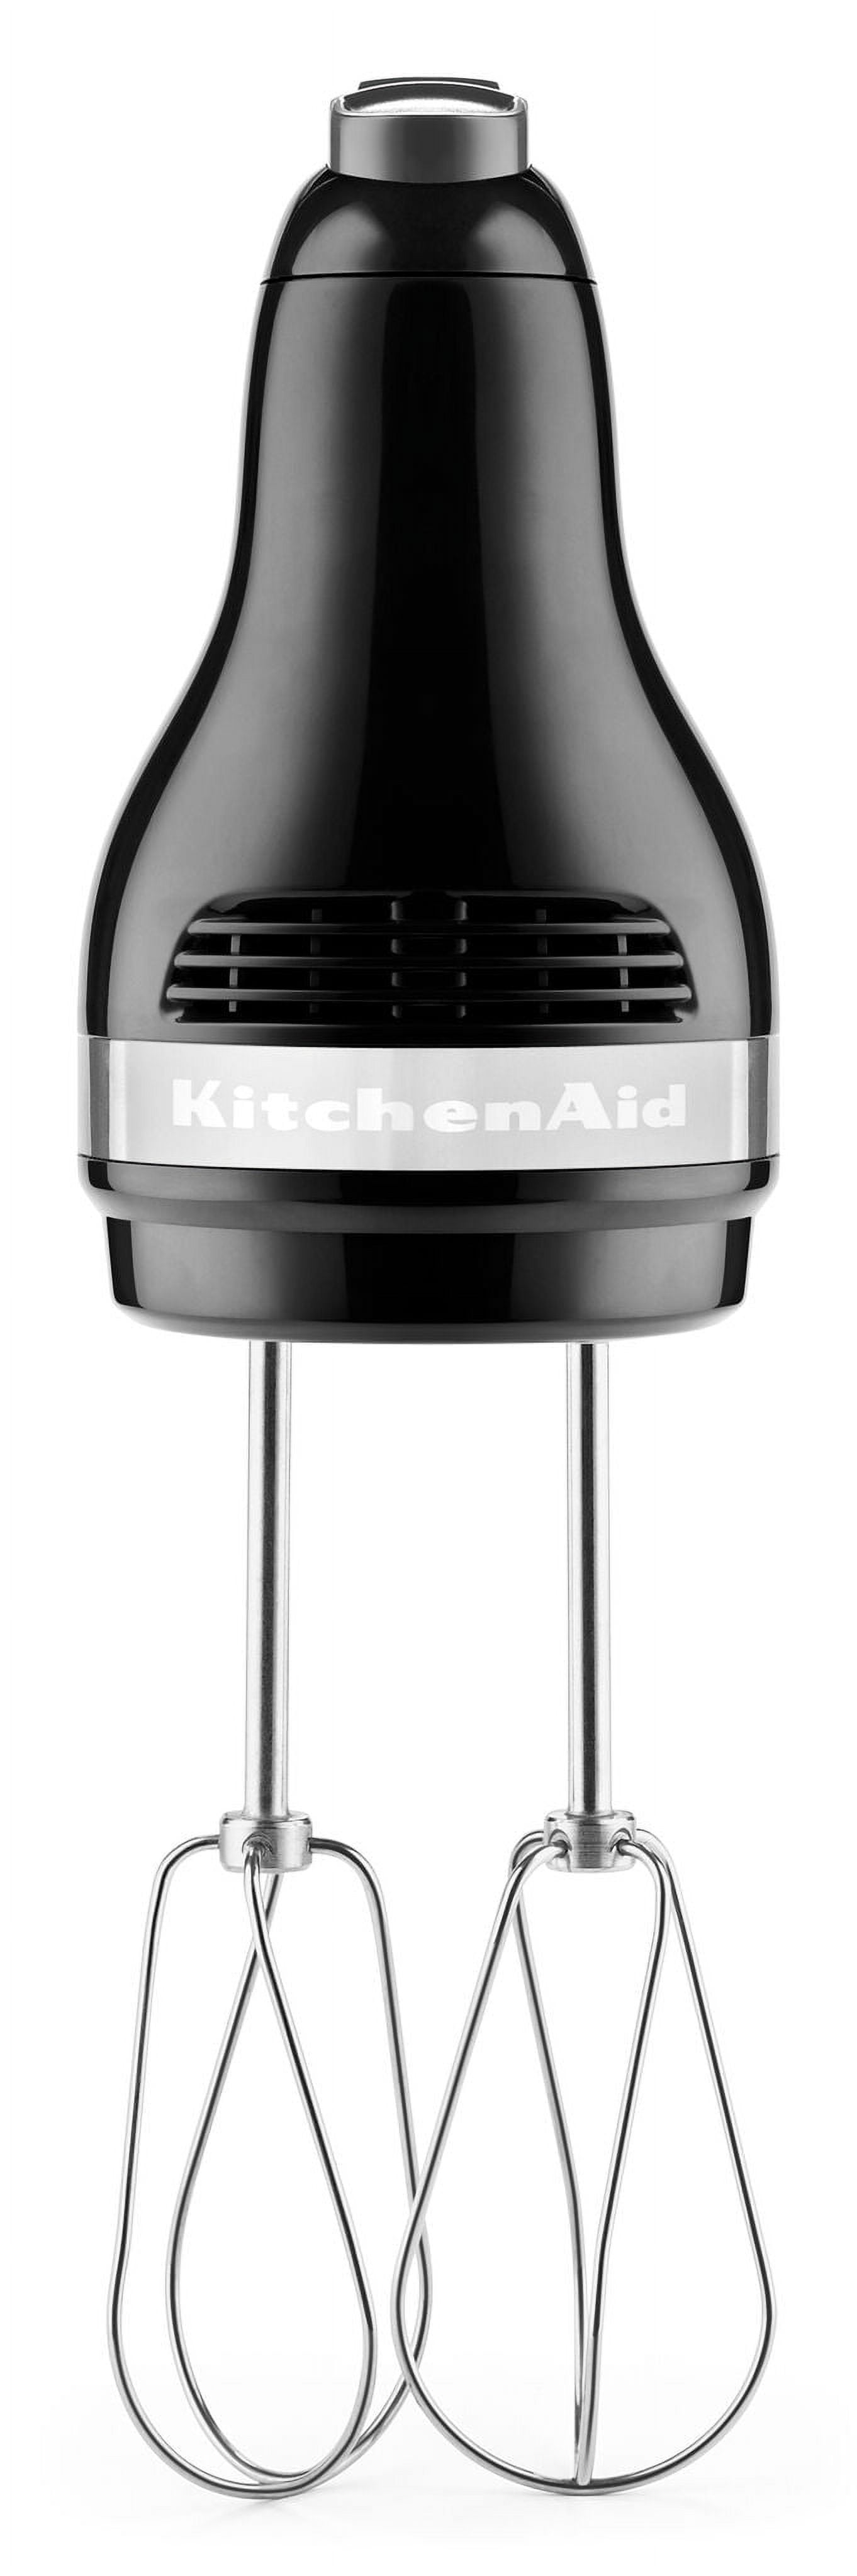 KitchenAid Ultra Power 5-Speed White Hand Mixer Model KHM5APWH7